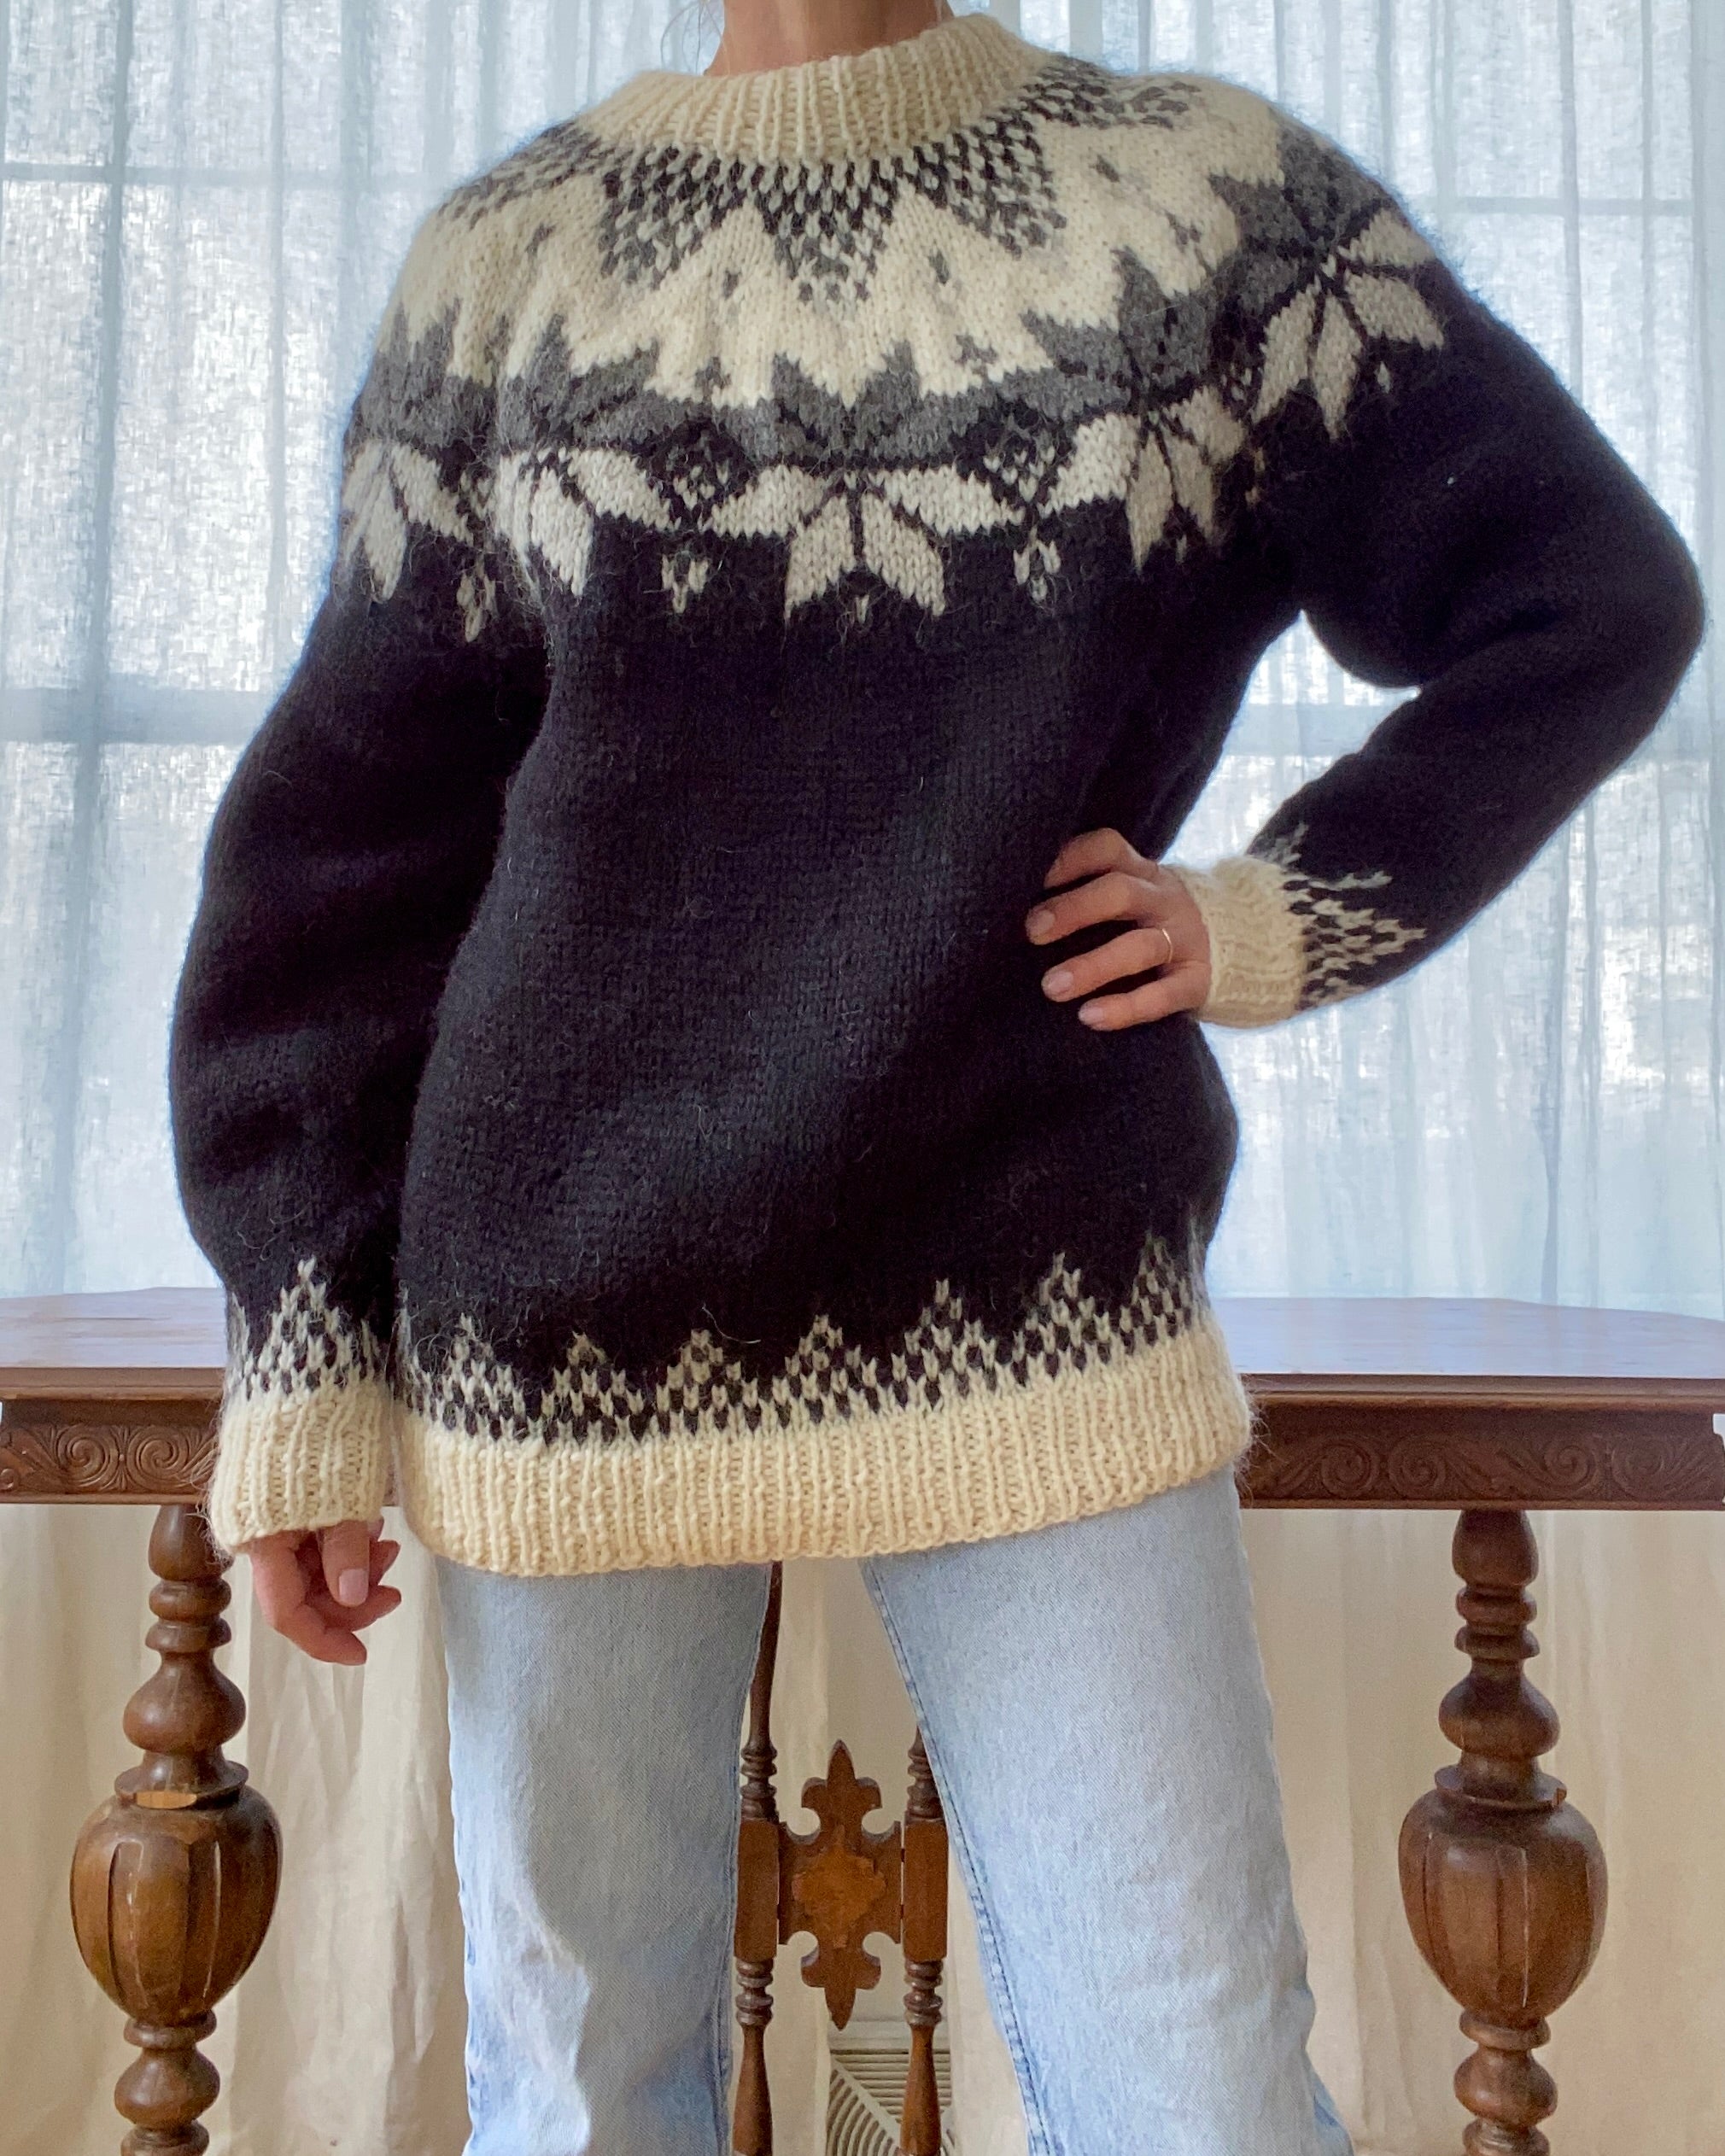 Vintage Icelandic Lopi Fair Isle Black and Cream Sweater L XL